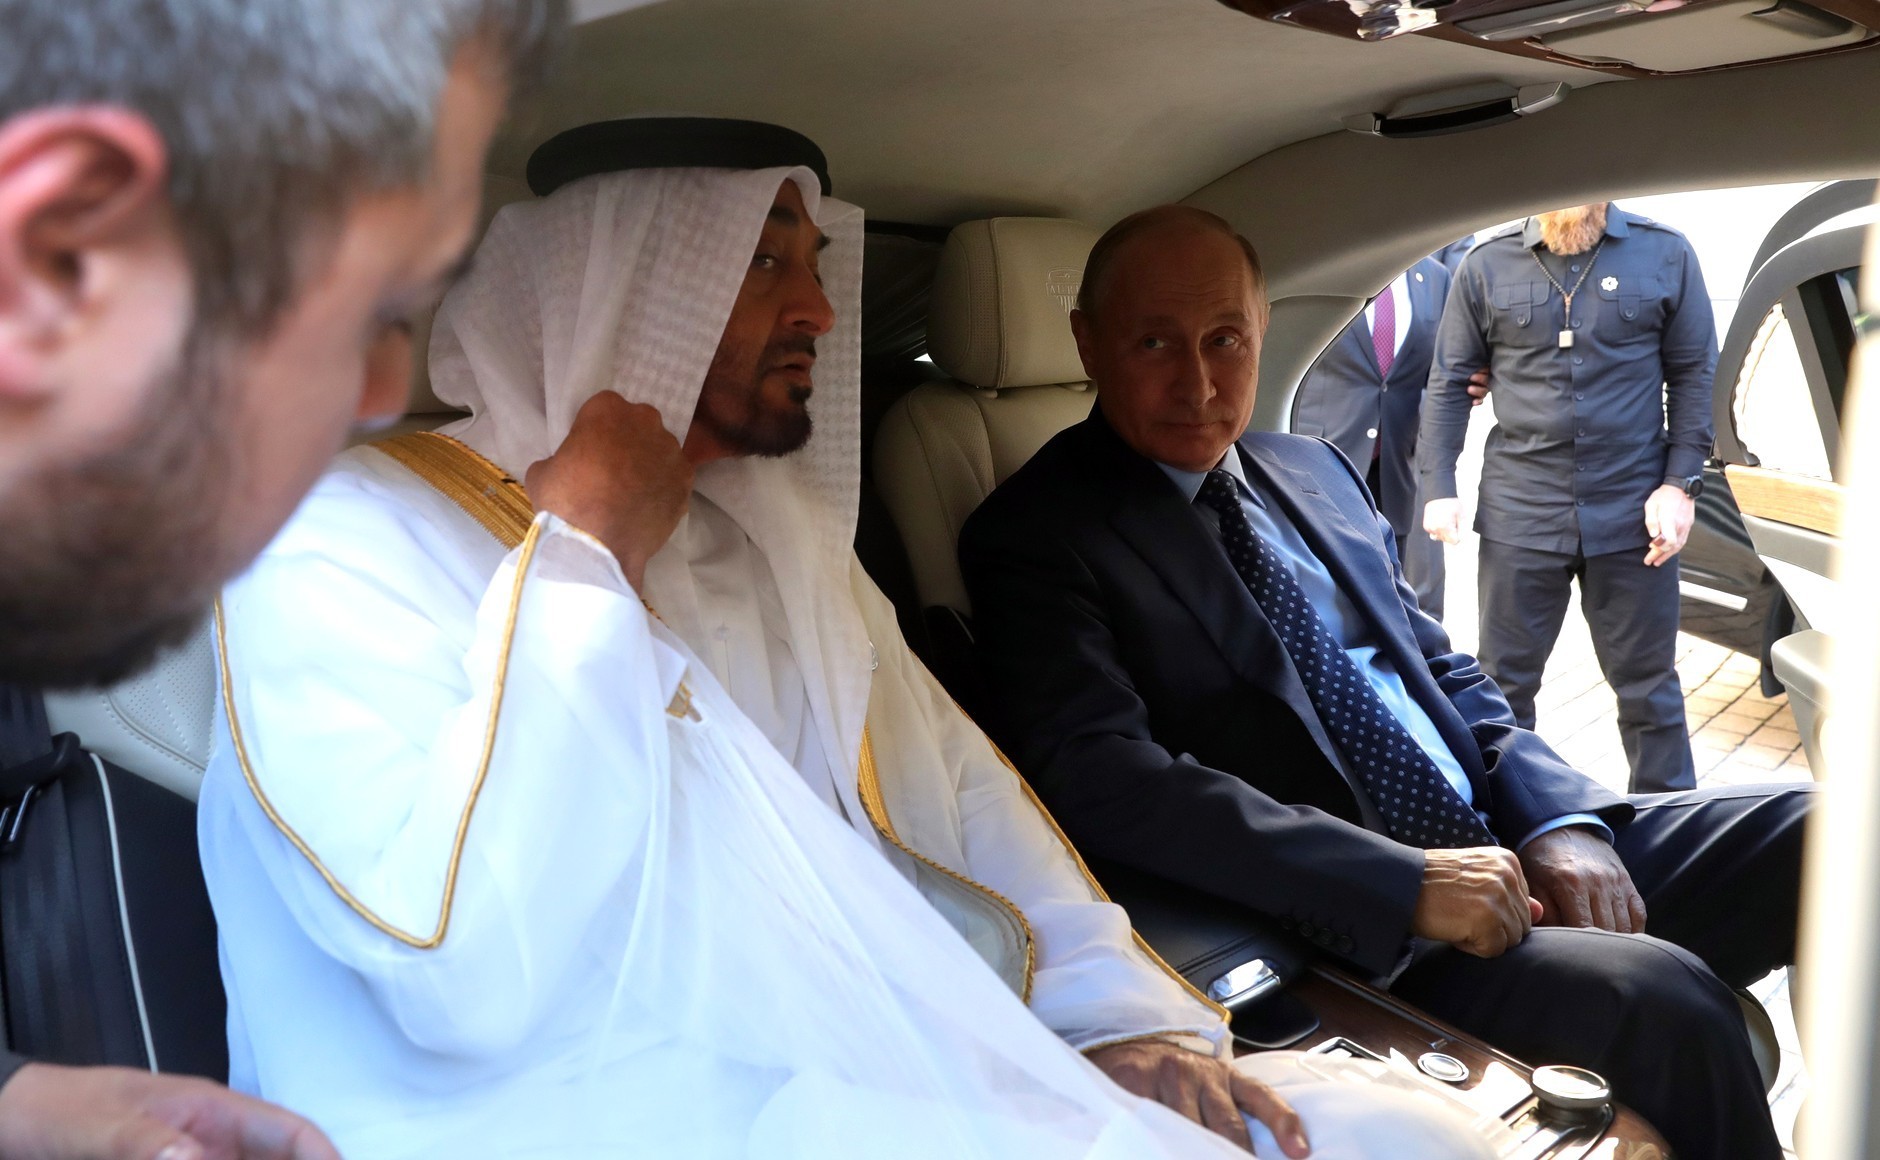 Putin i prijestolonasljednik emirata Abu Dhabija Mohammed bin Zayed Al Nahyan u limuzini Aurus, 1. lipnja 2018.